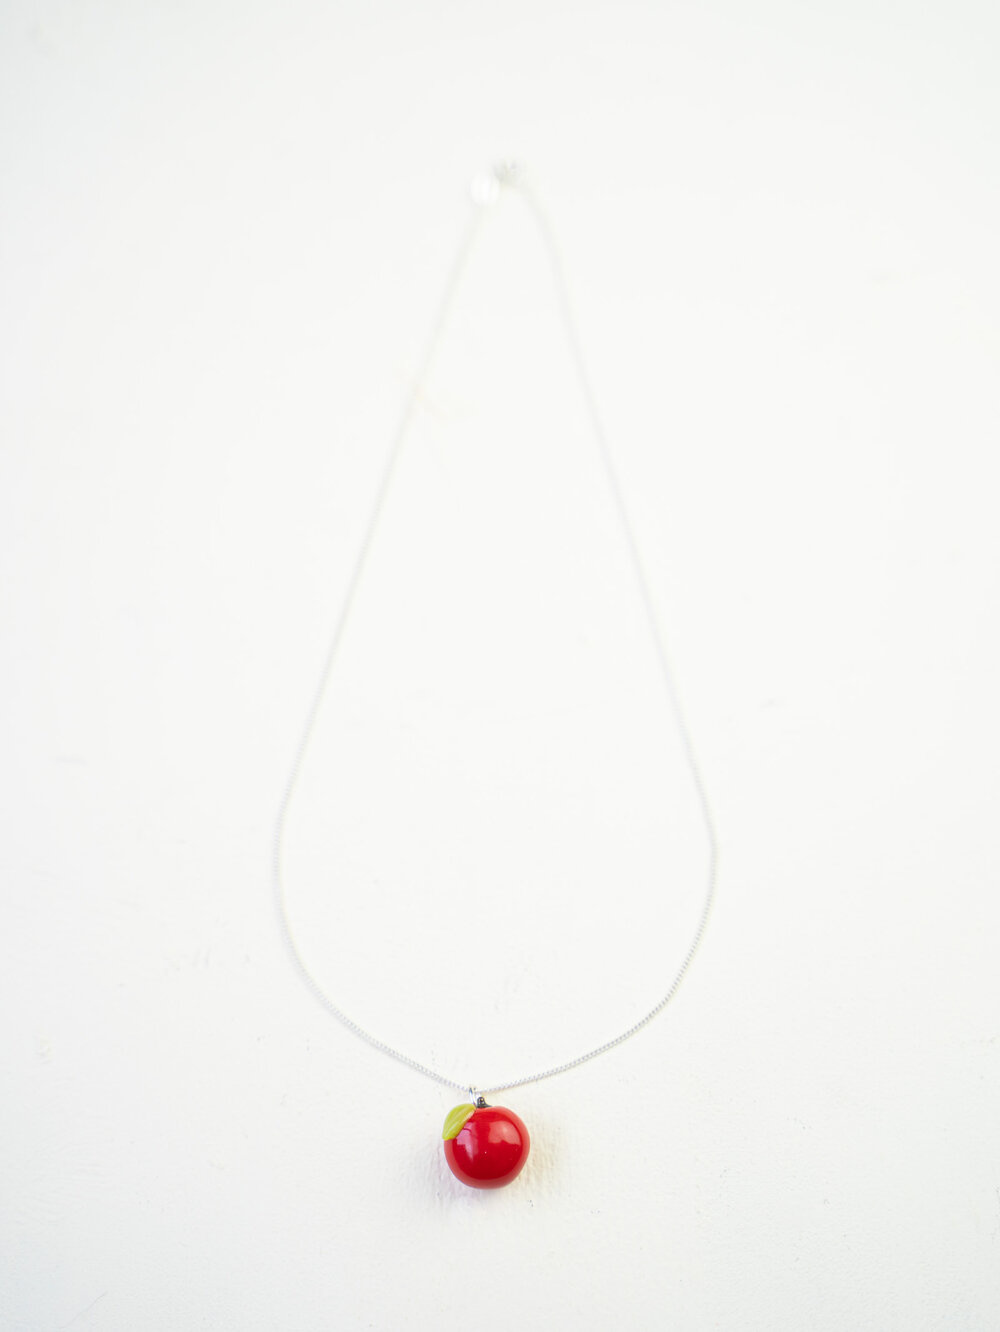 Minori Takagi Necklace Fruit - Red Apple